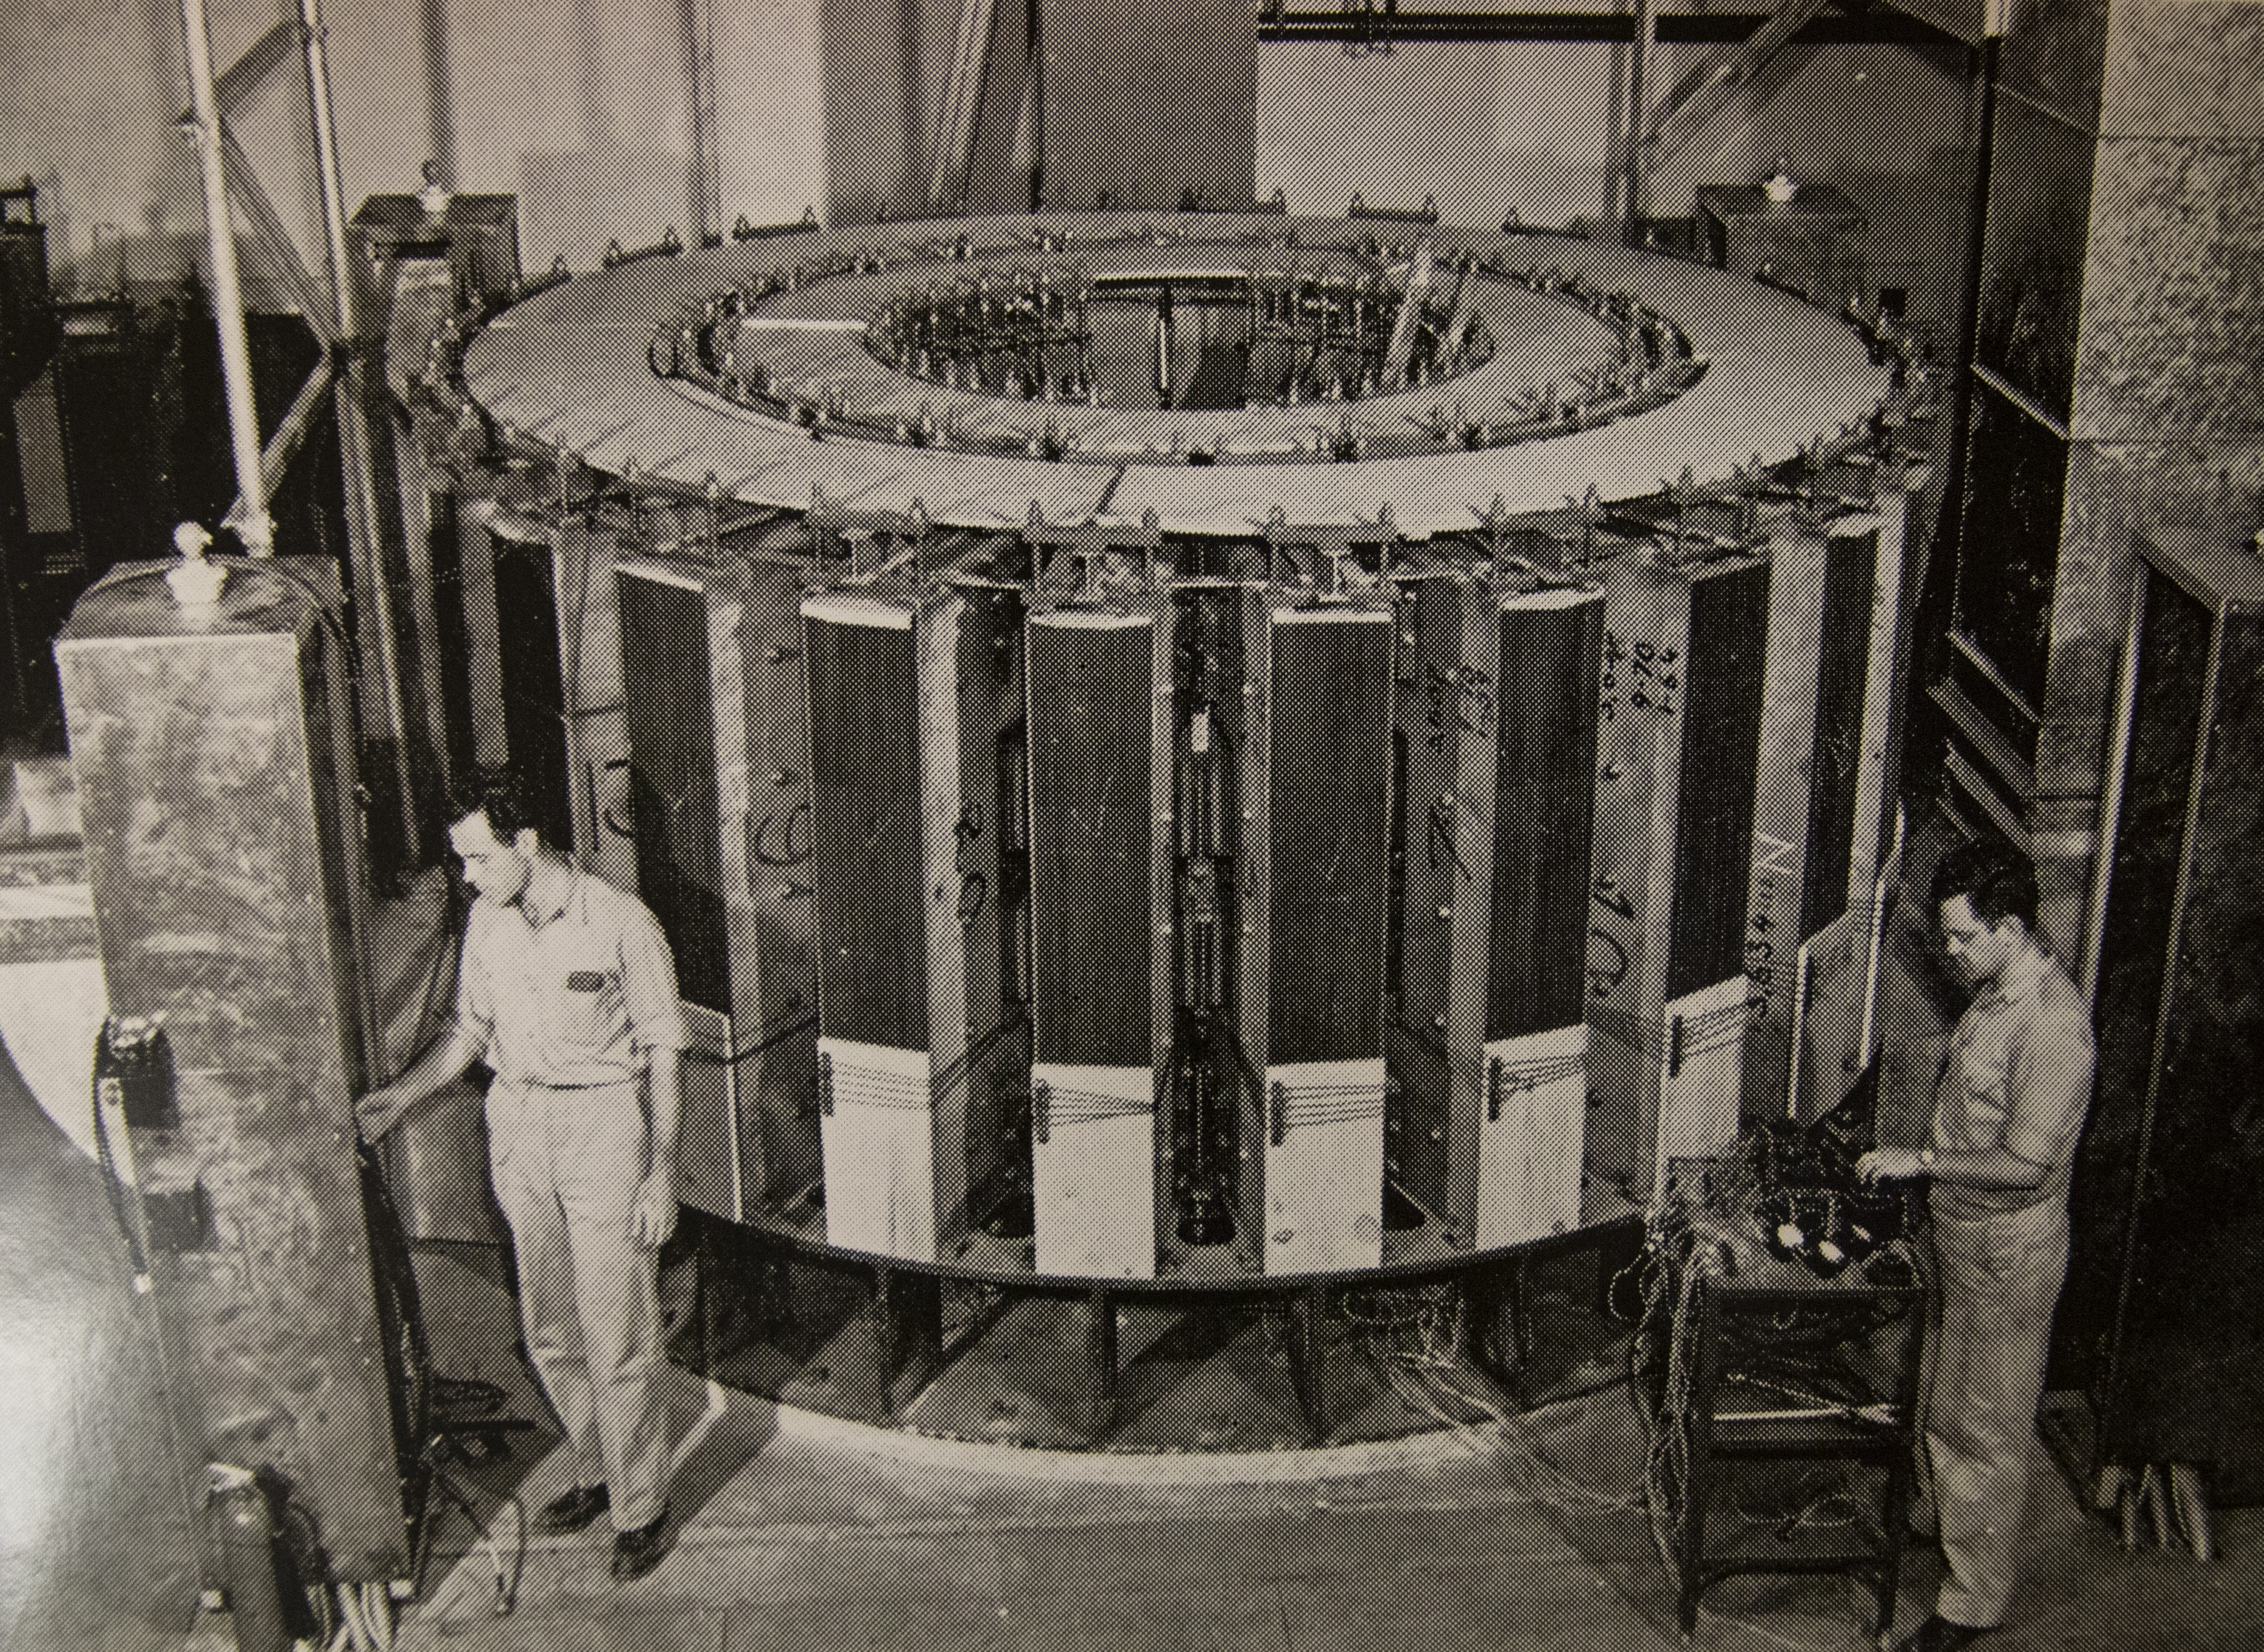 A vintage image of a synchrotron